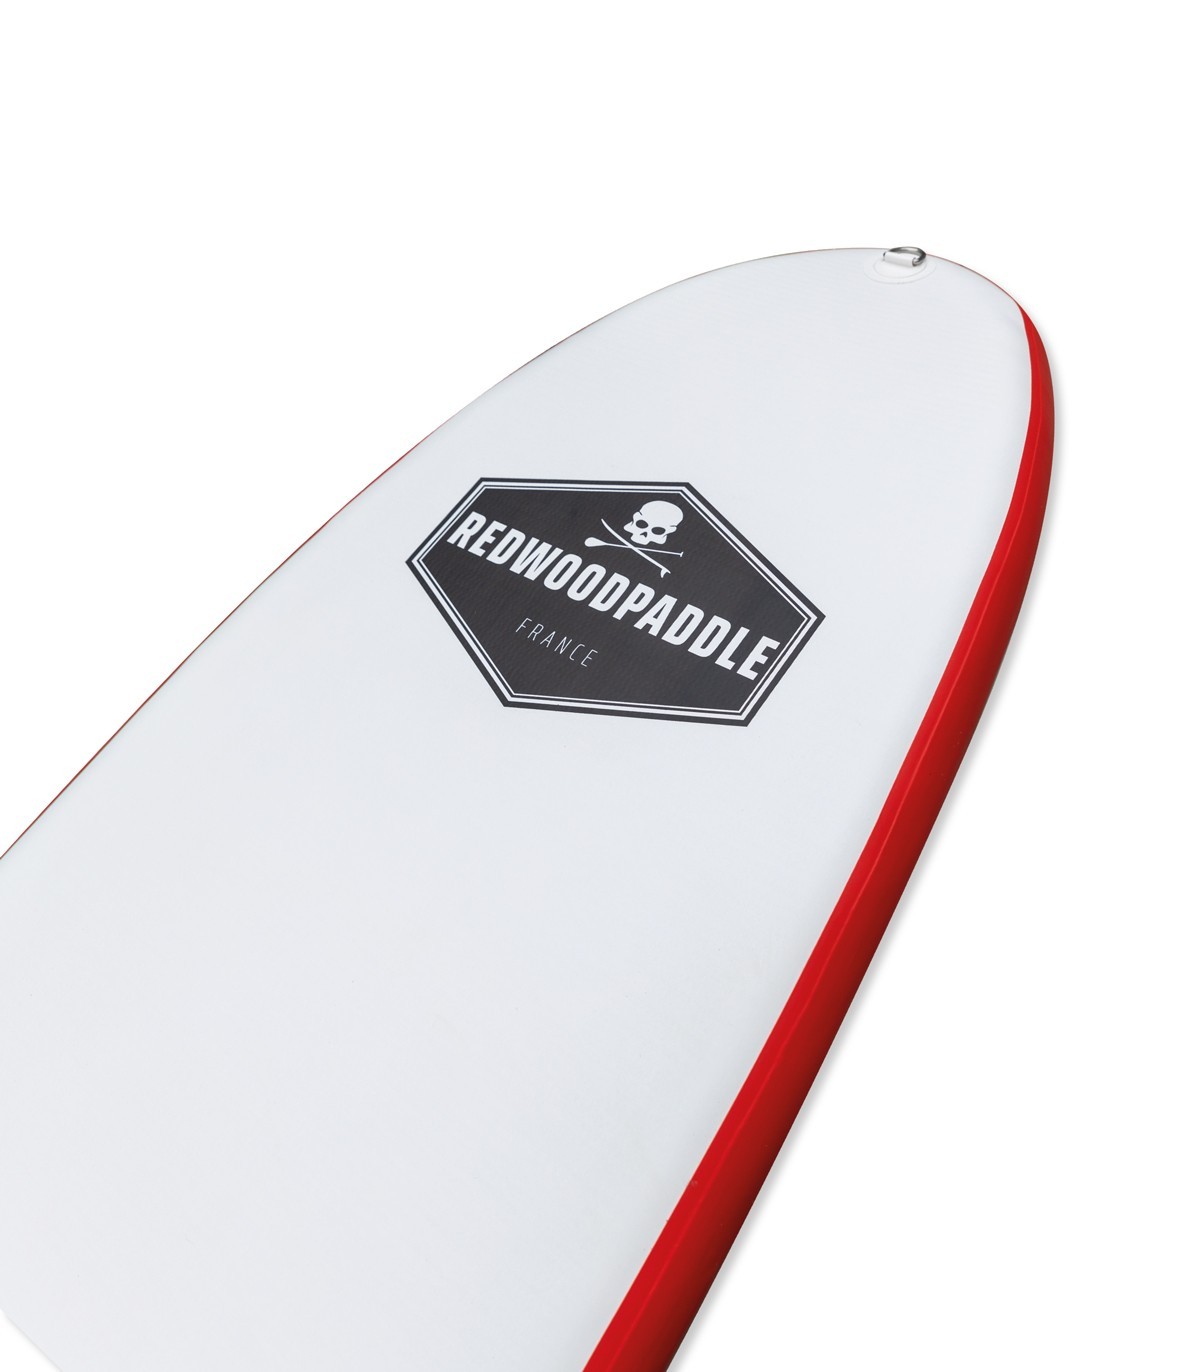 Funbox Pro 10′2 Wide - Tabla Paddle Surf